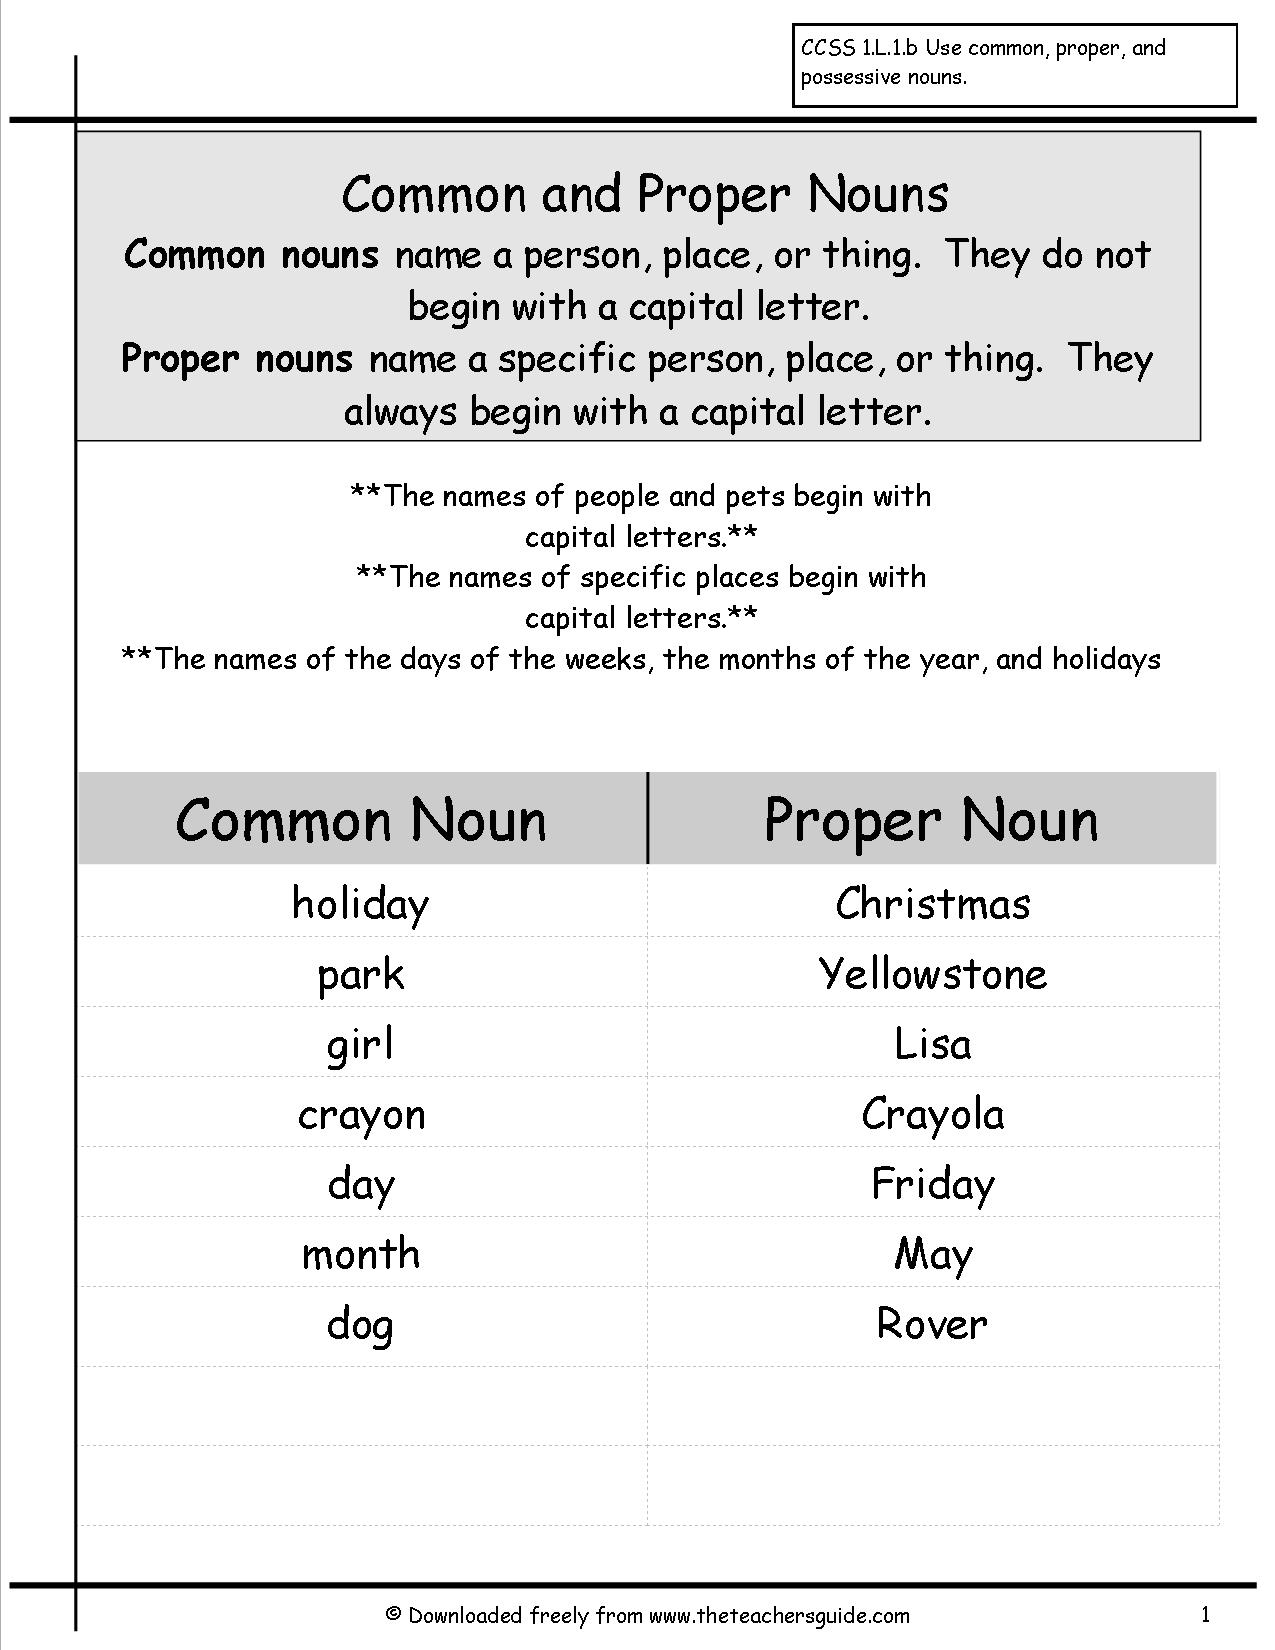 Common Proper Nouns Worksheet Middle School